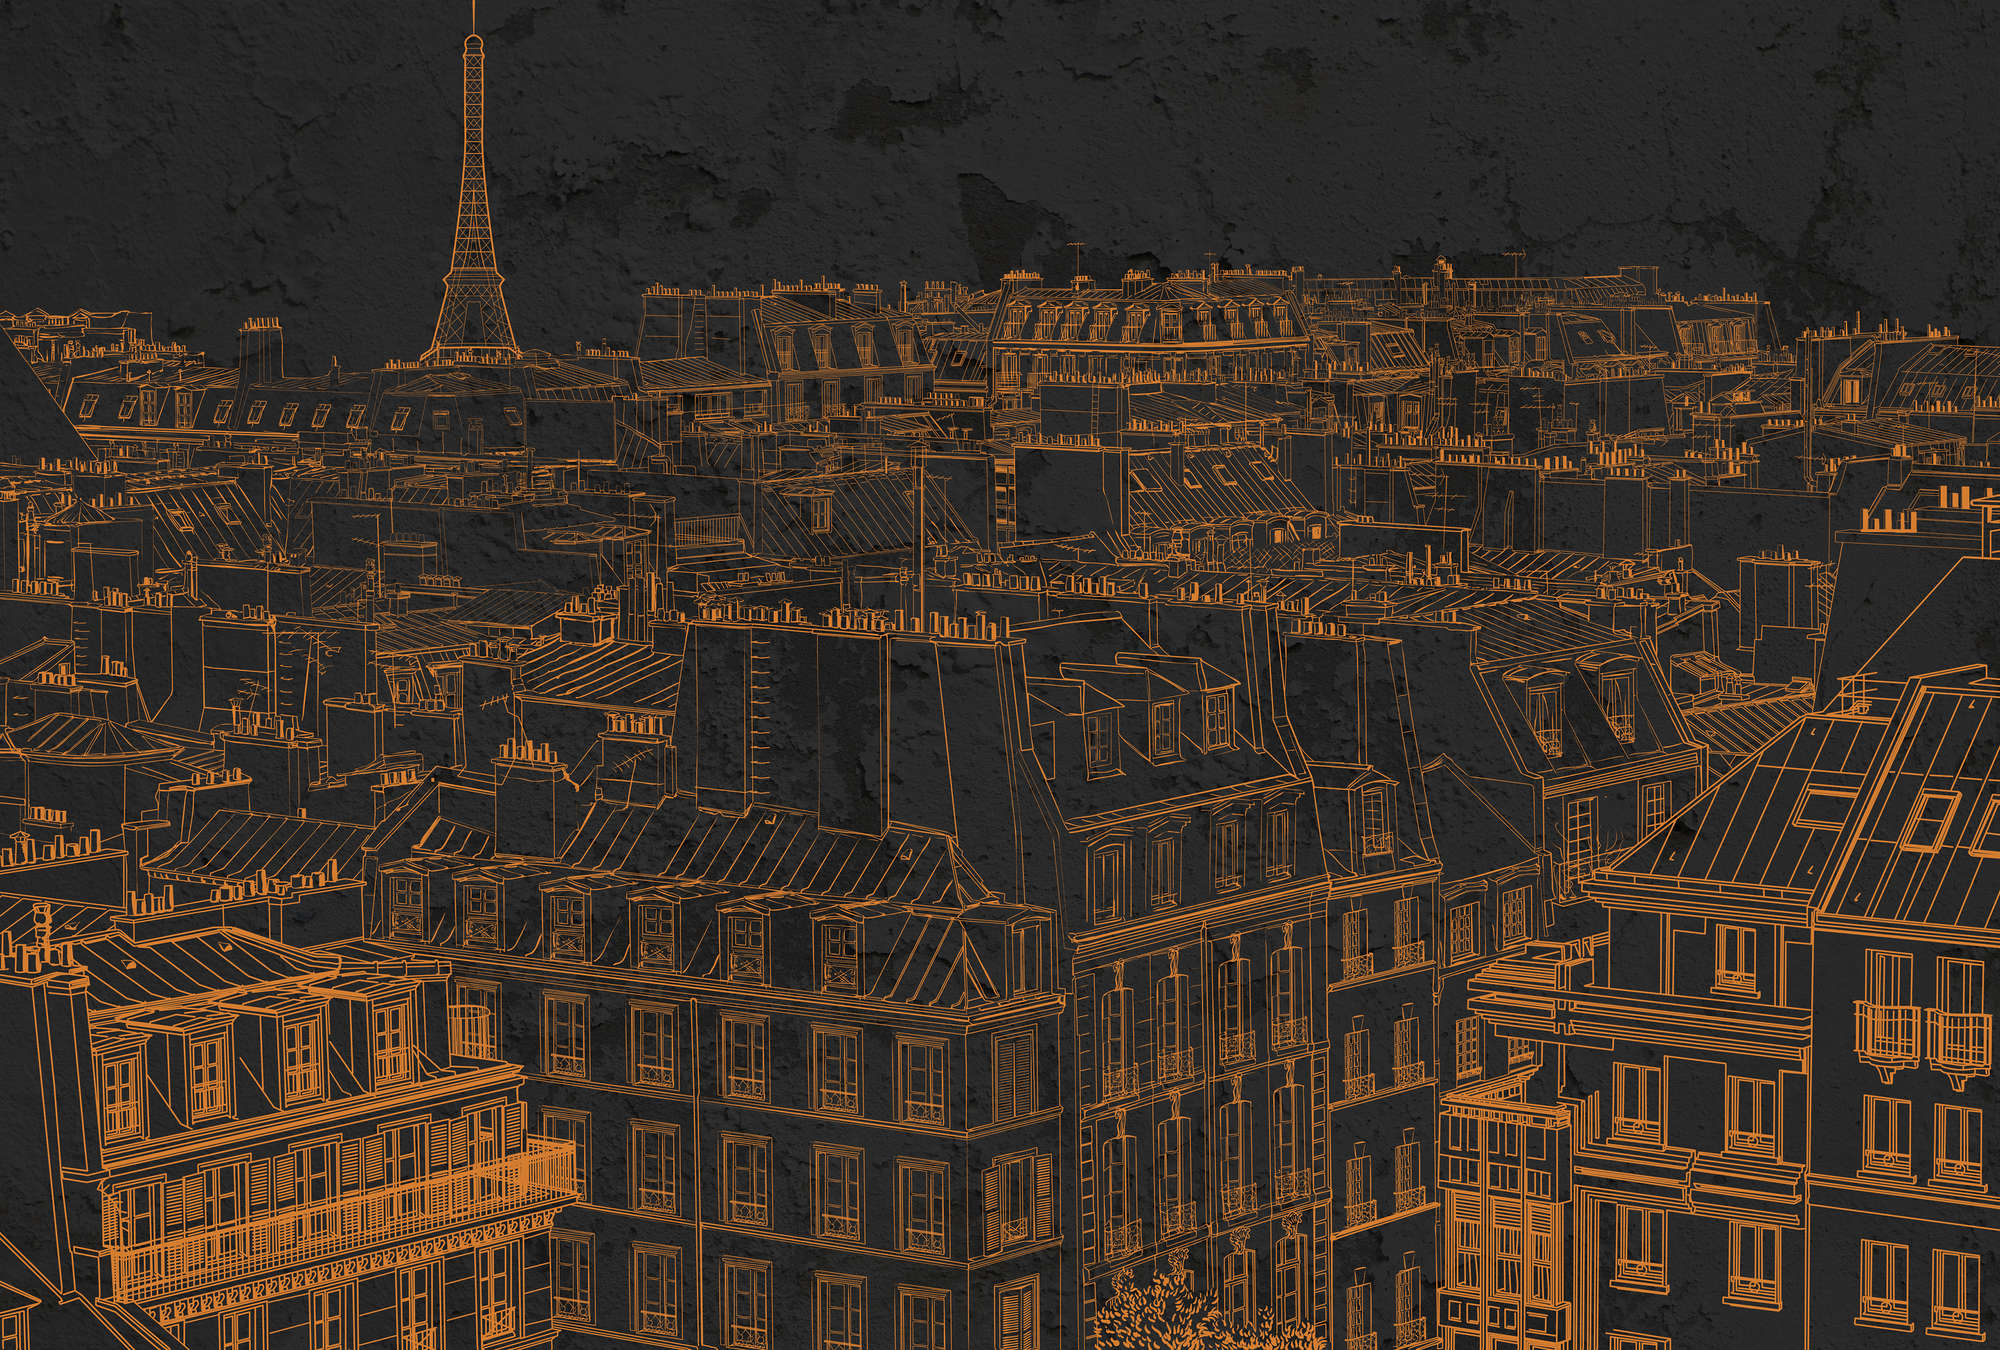             wallpaper Paris Sketches Skyline - Orange, Black
        